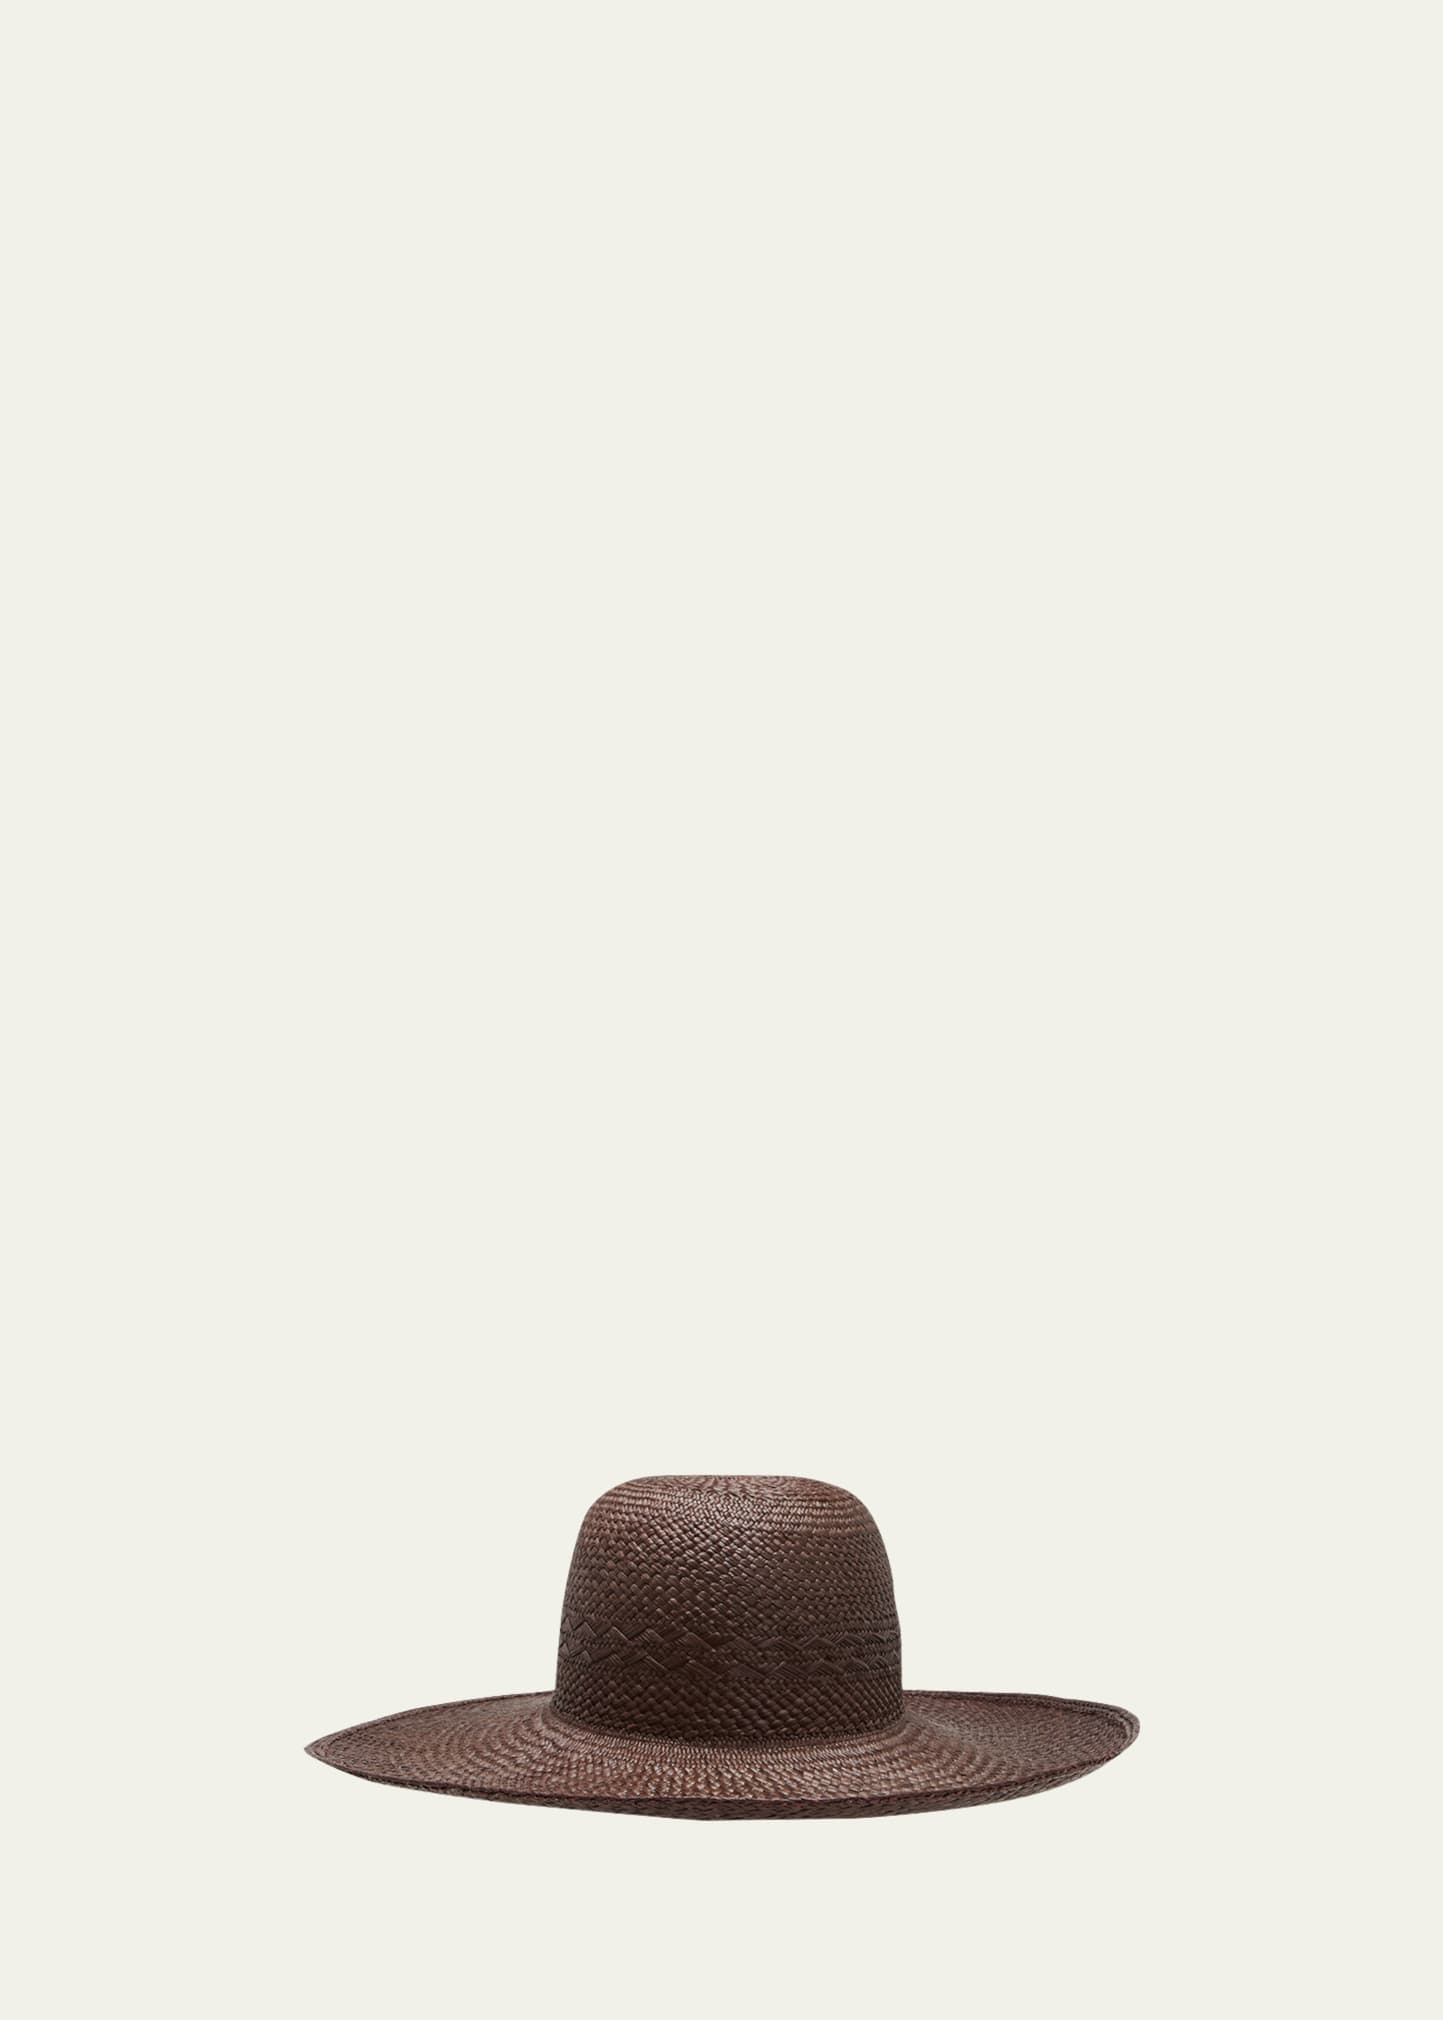 Loro Piana Gilda Woven Straw Hat In Hd72 Walnut